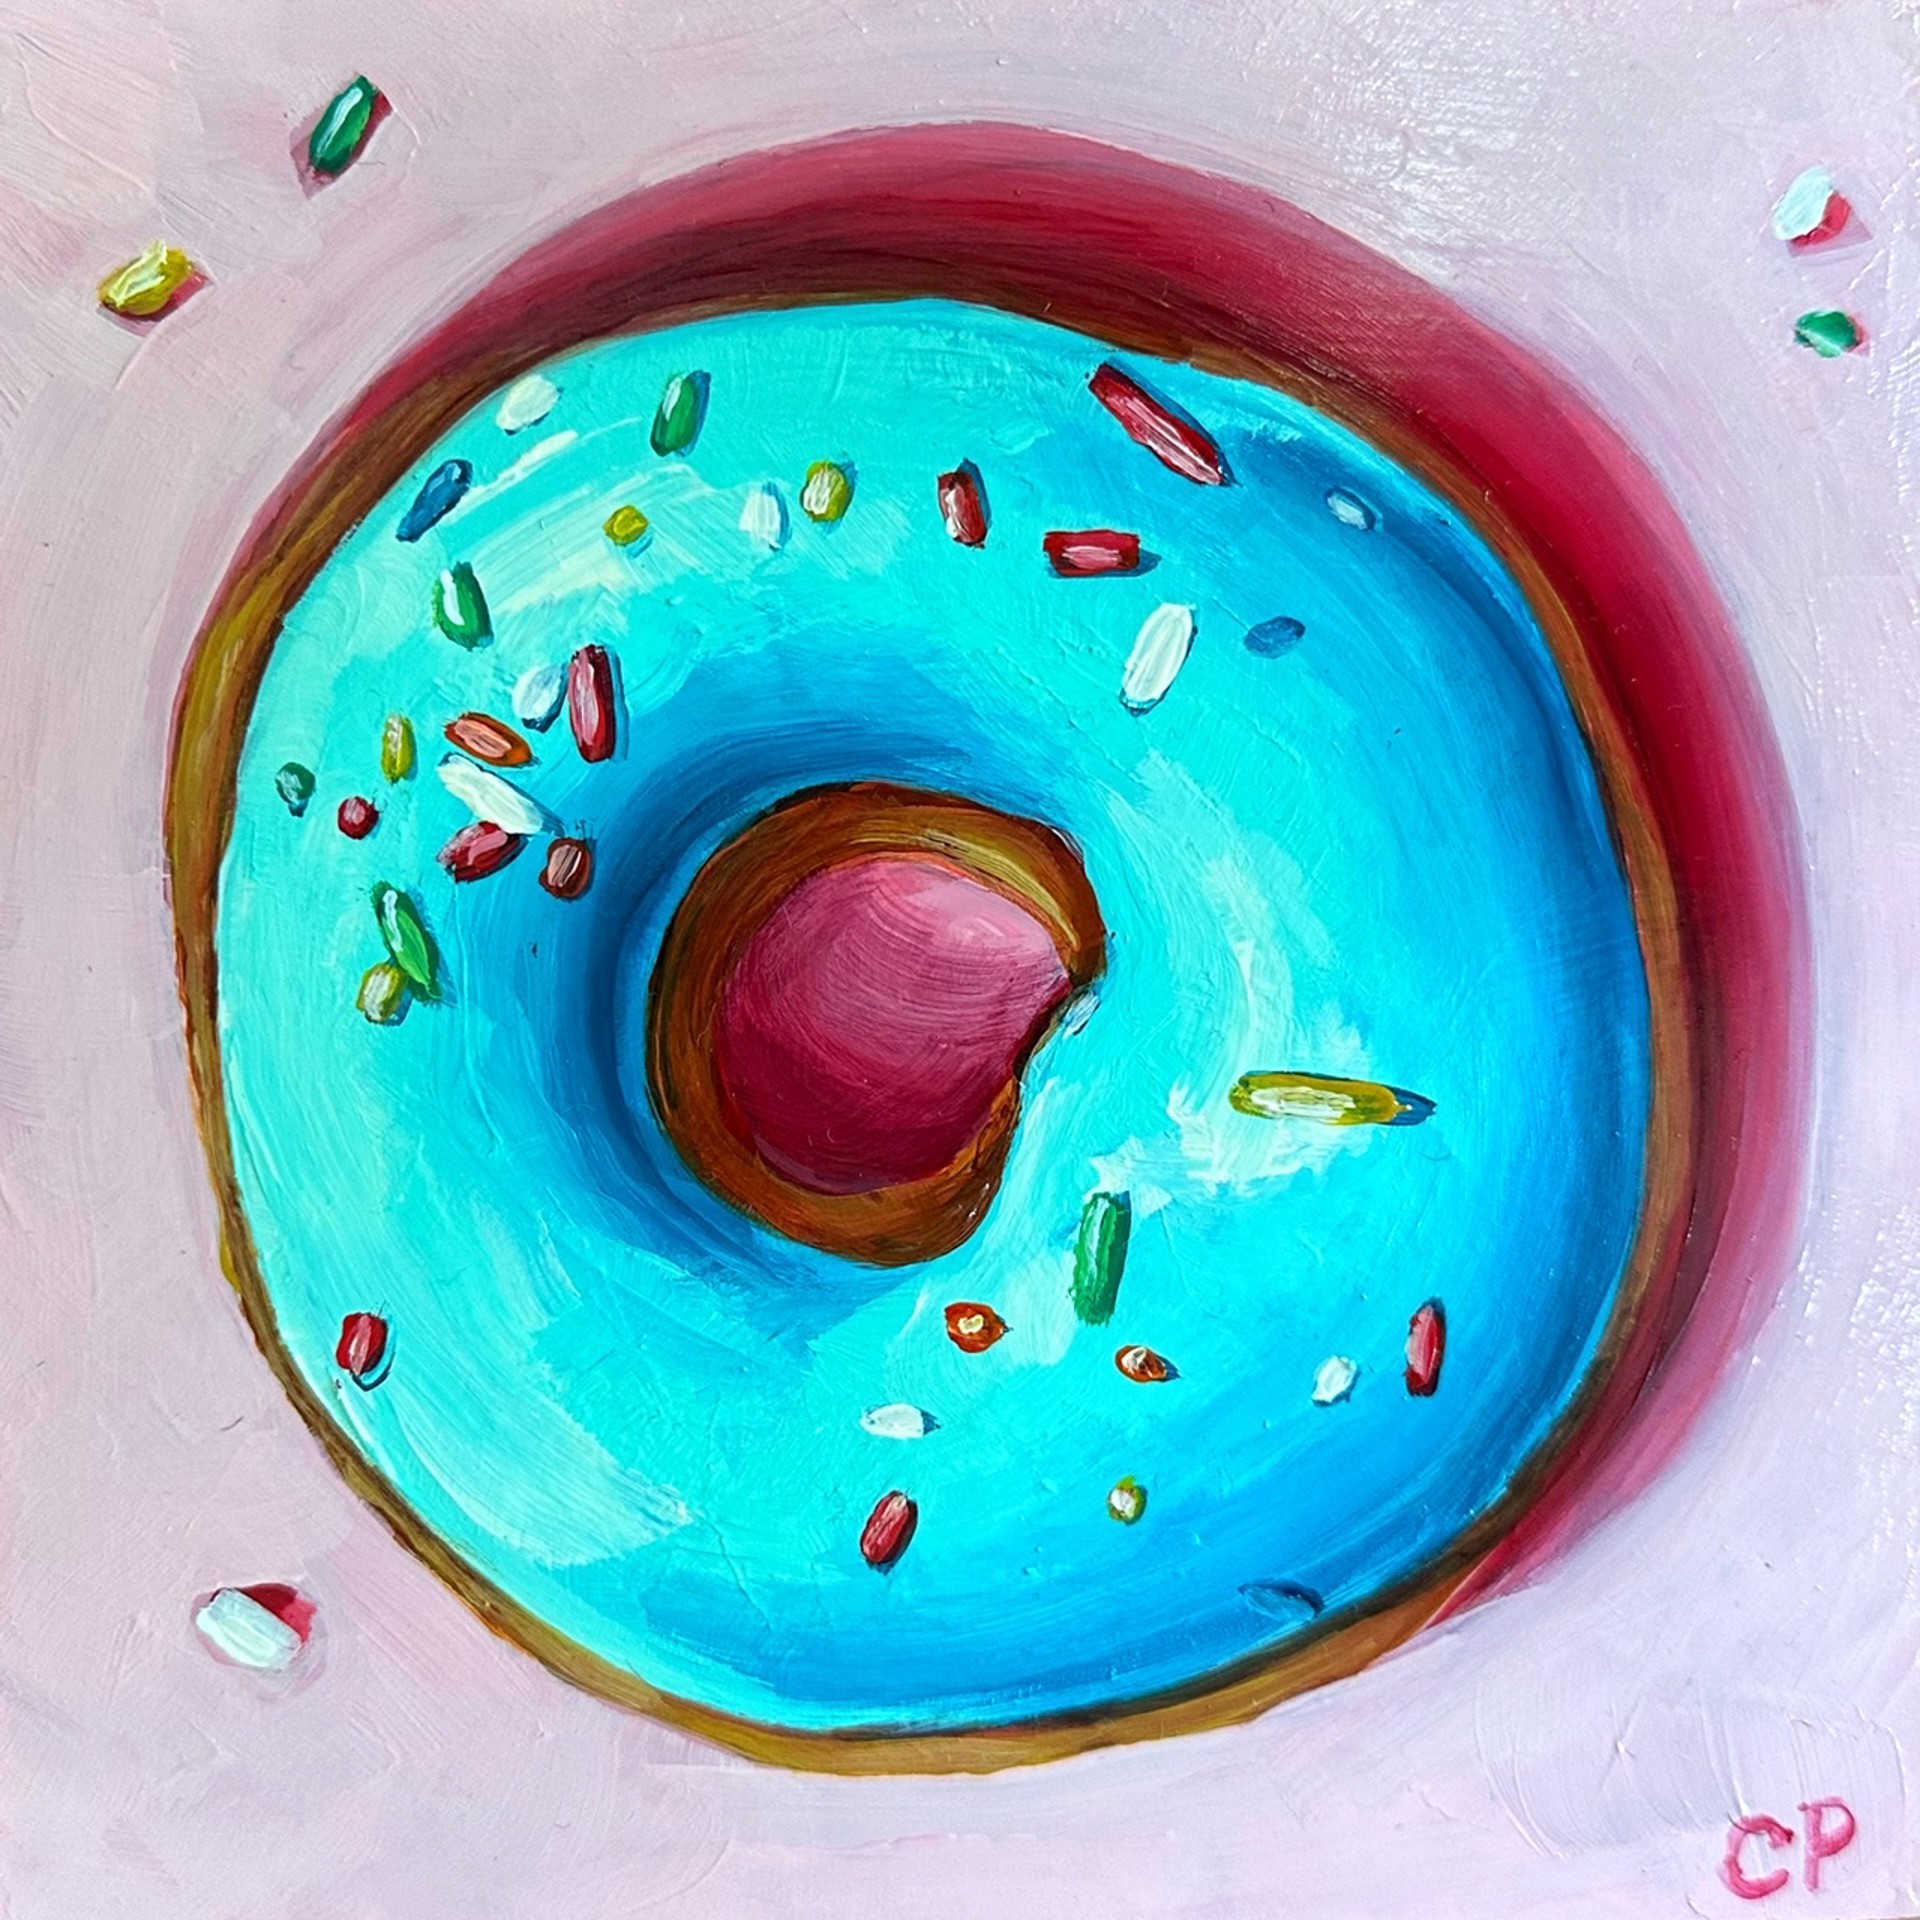 Donut by Cullen Peck